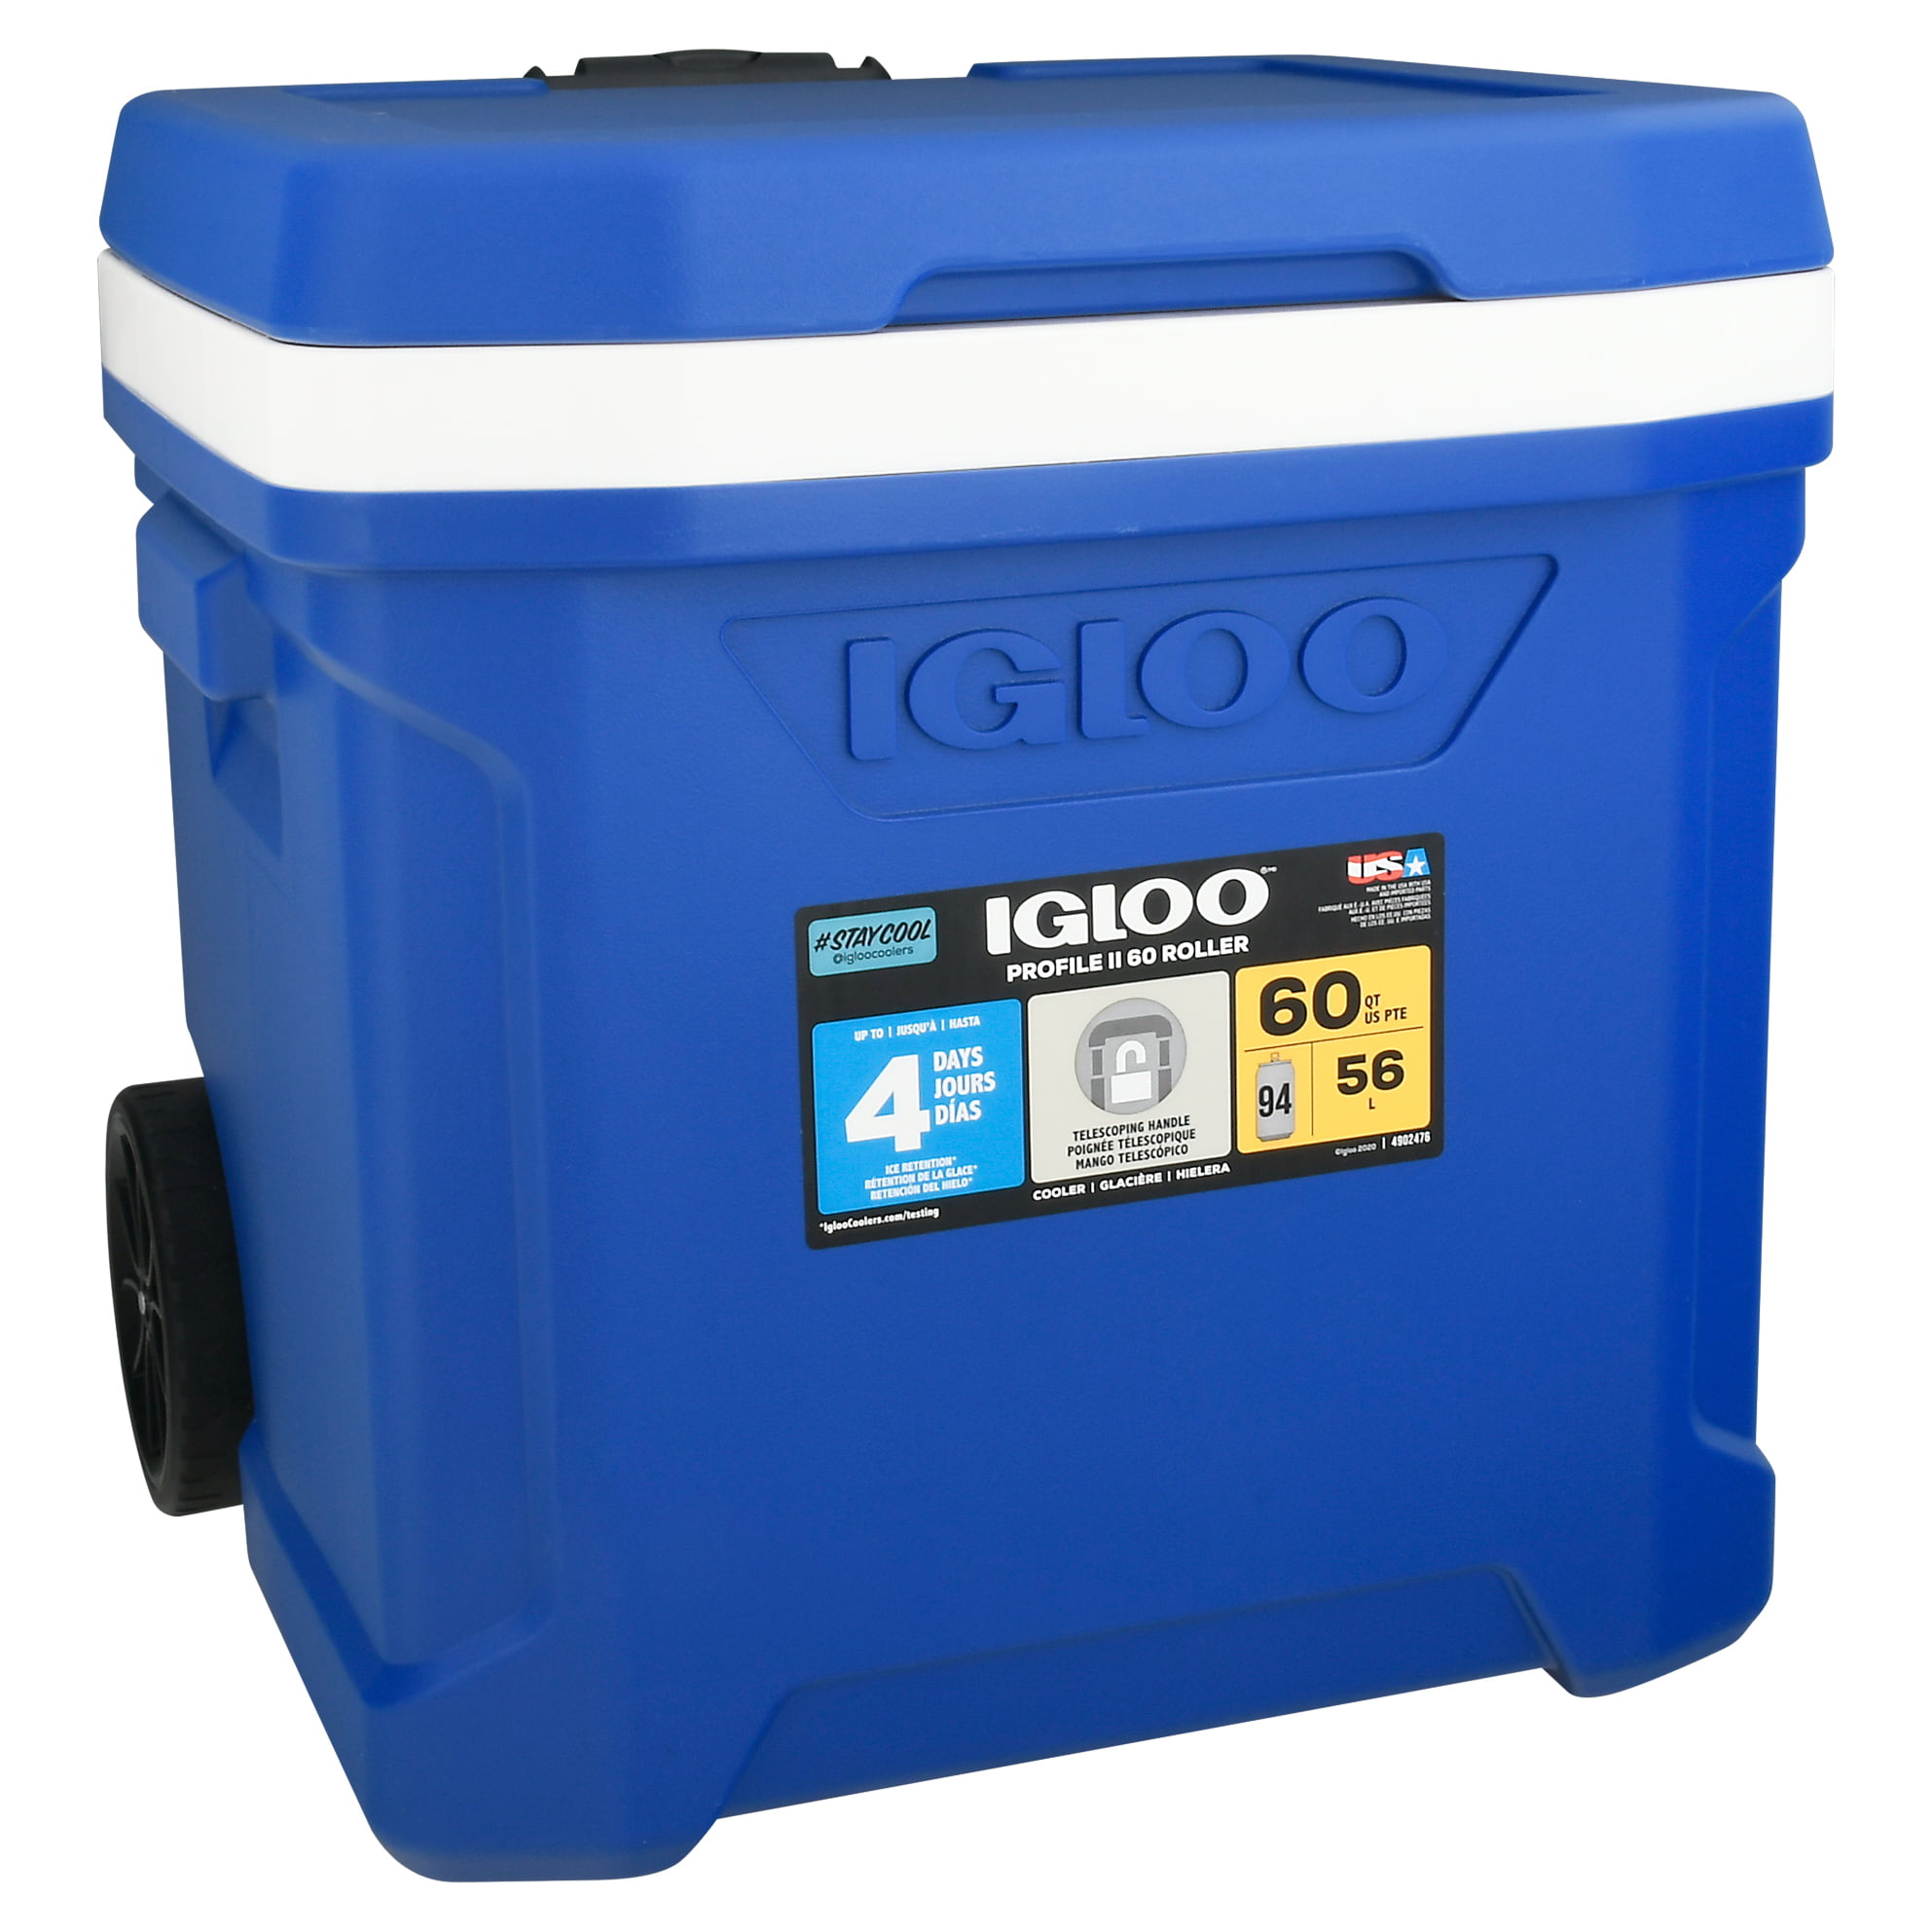 60-Quart, Ocean Blue Igloo Ice Cube Roller Cooler 